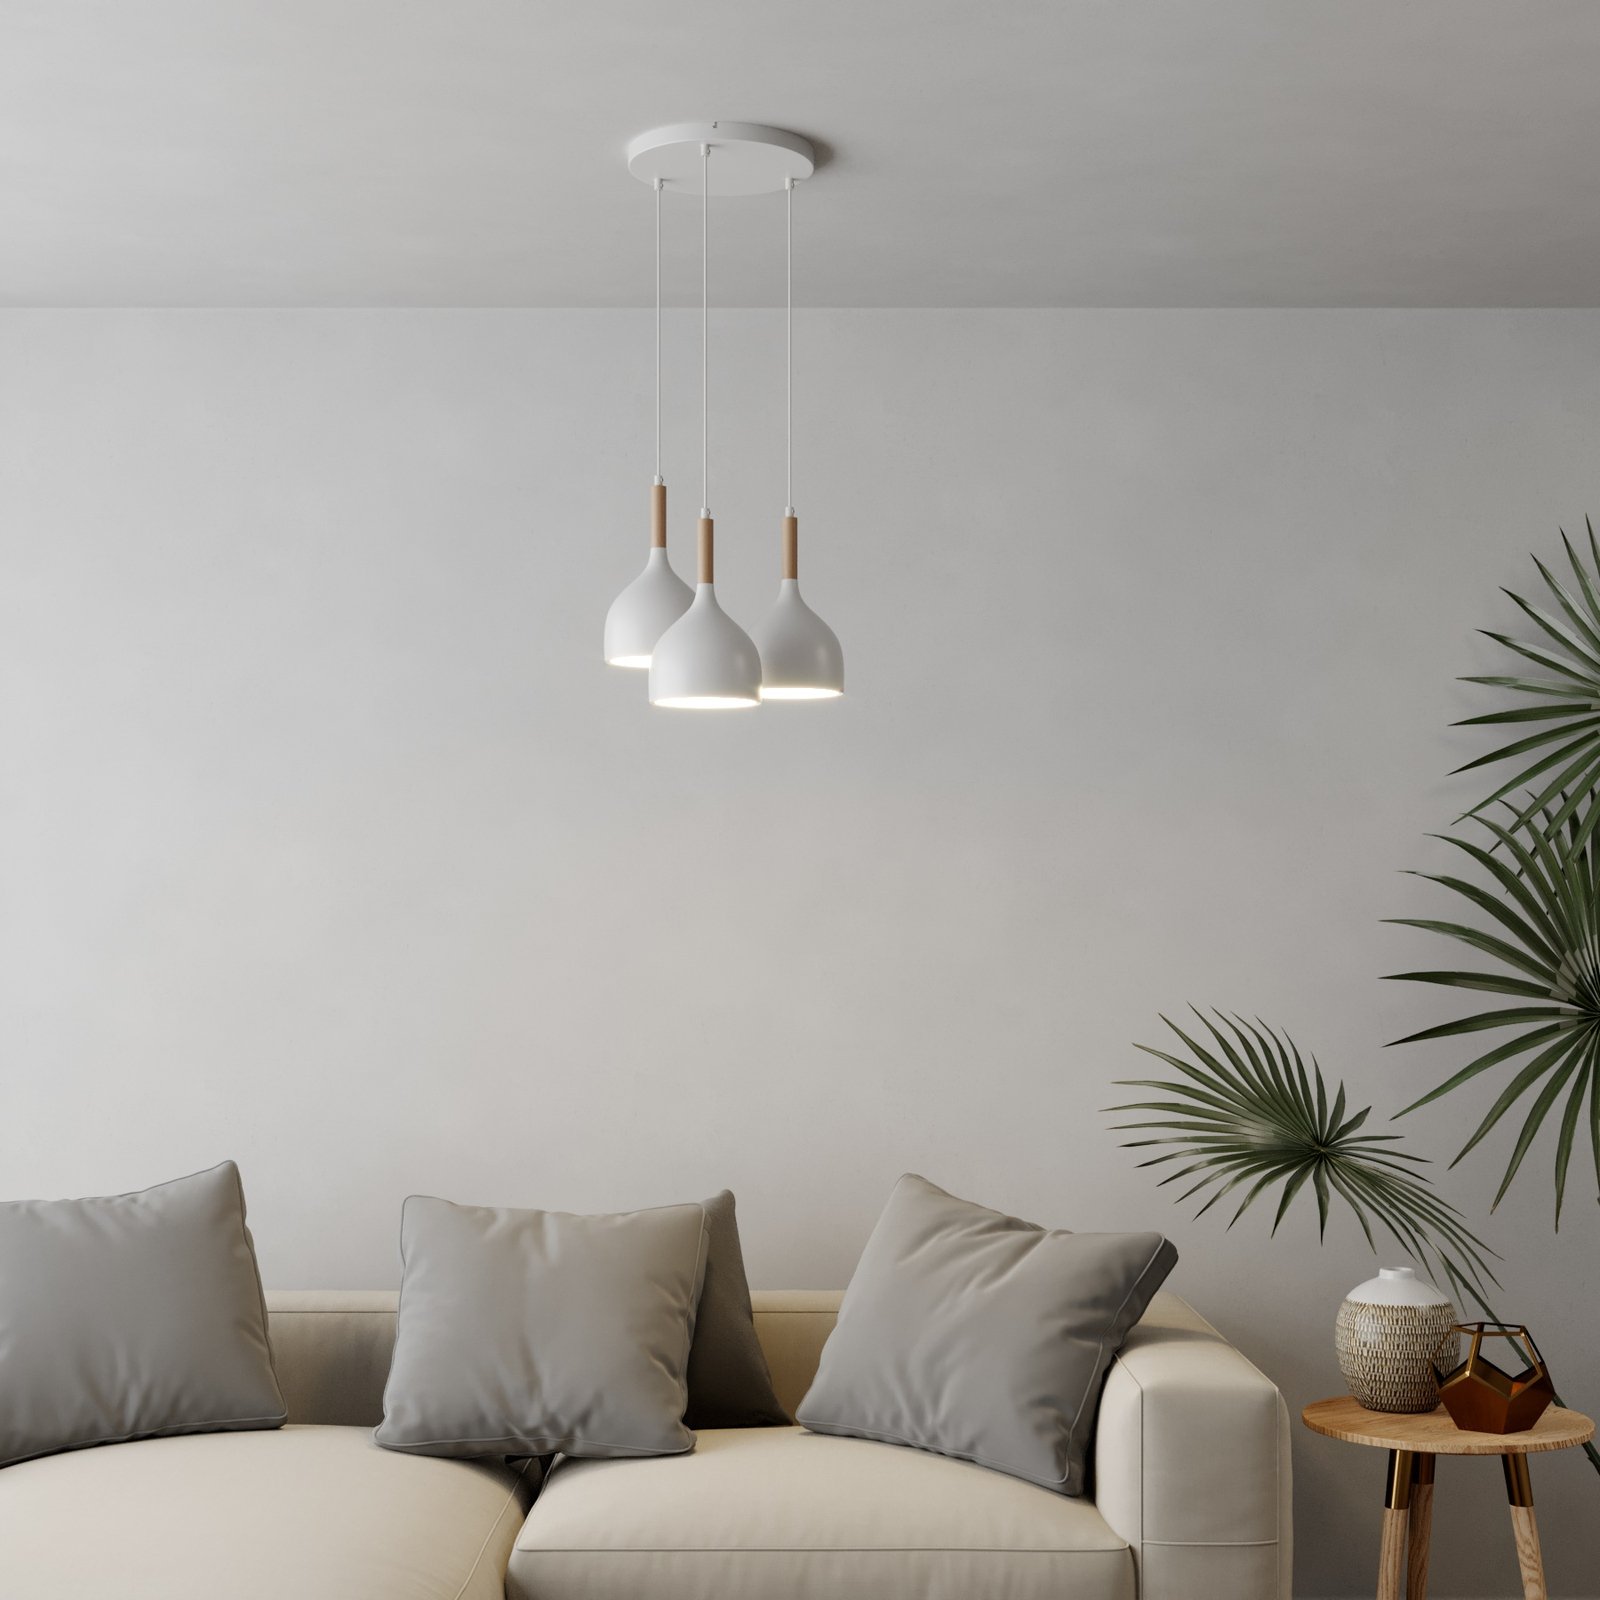 Noak hanging light 3-bulb round white/natural wood